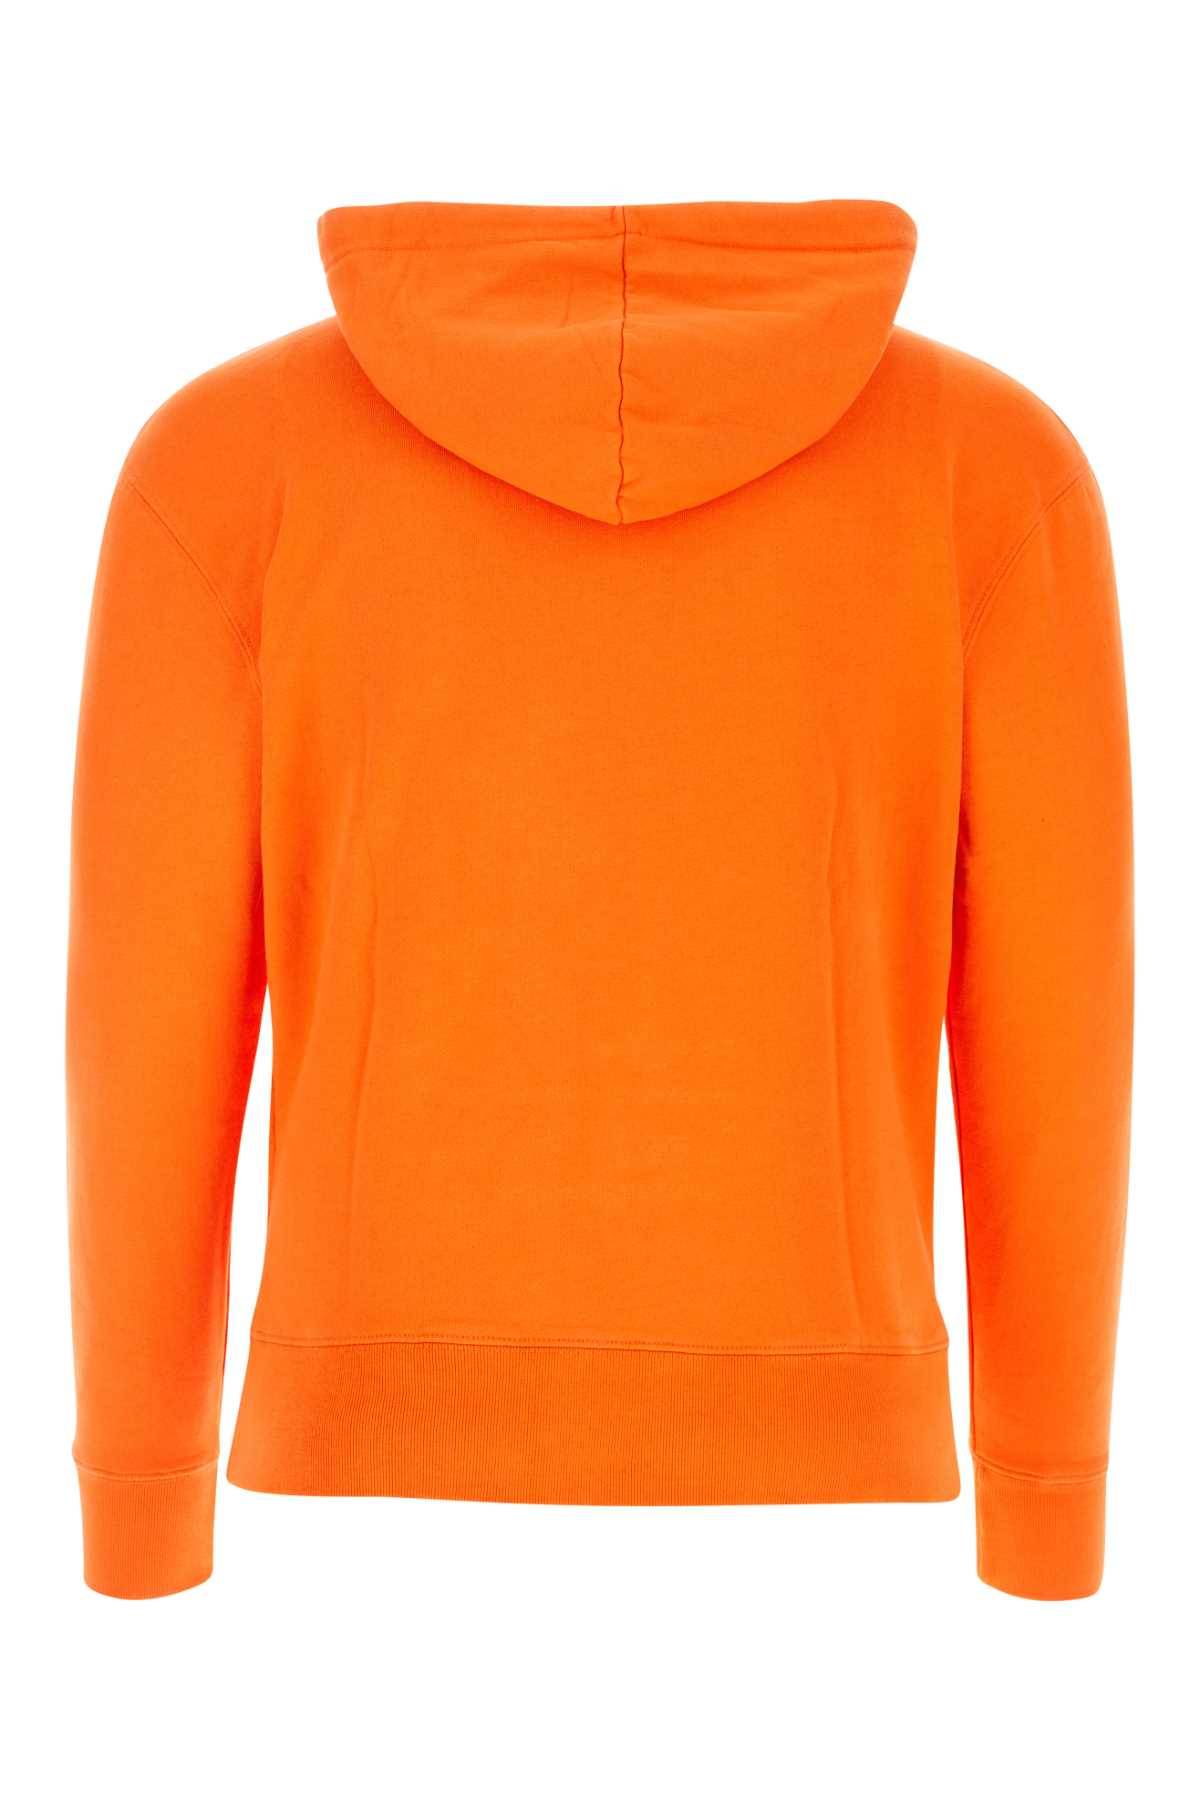 Maison Kitsuné Orange Cotton Sweatshirt In P851